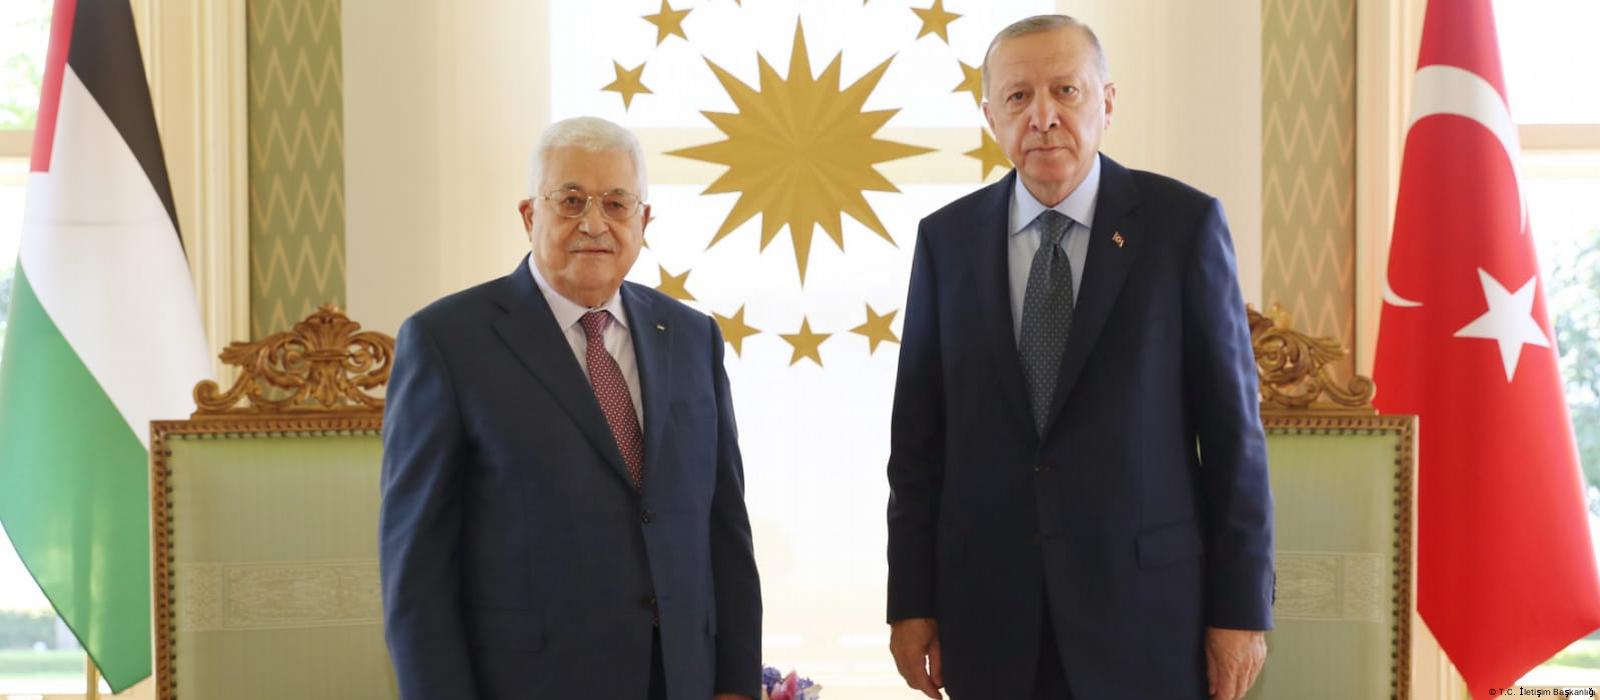 Filistin lideri Mahmut Abbas (solda) ve Cumhurbaşkanı Recep Tayyip Erdoğan